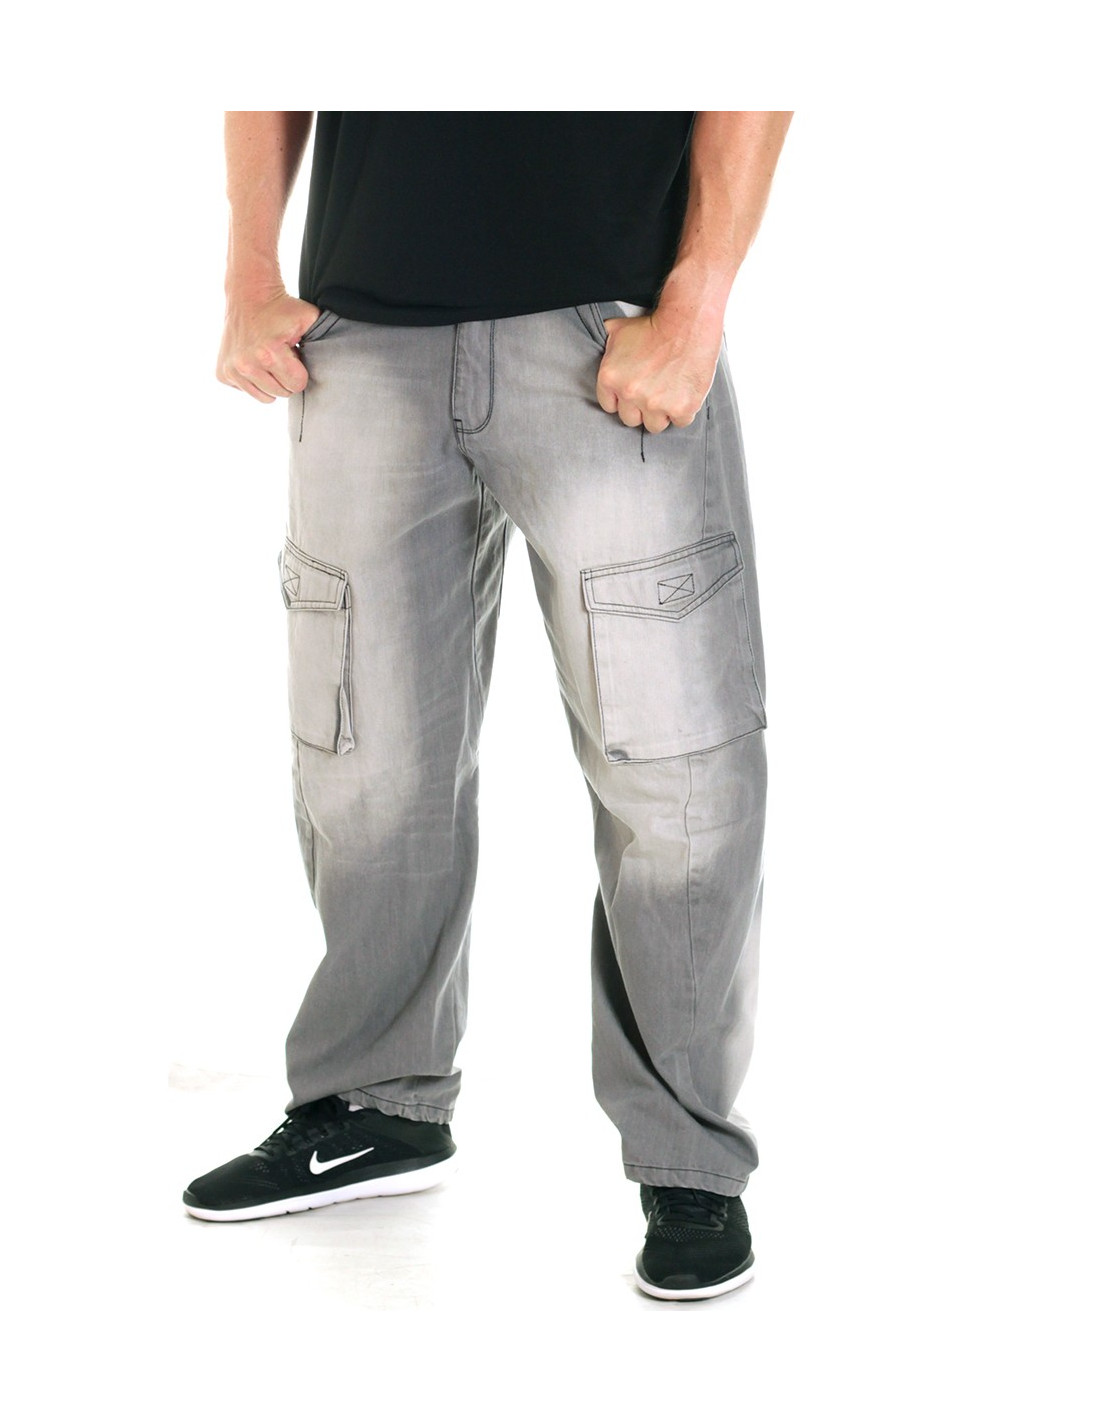 FAT313 Cargo Denim Jeans Grey Washed